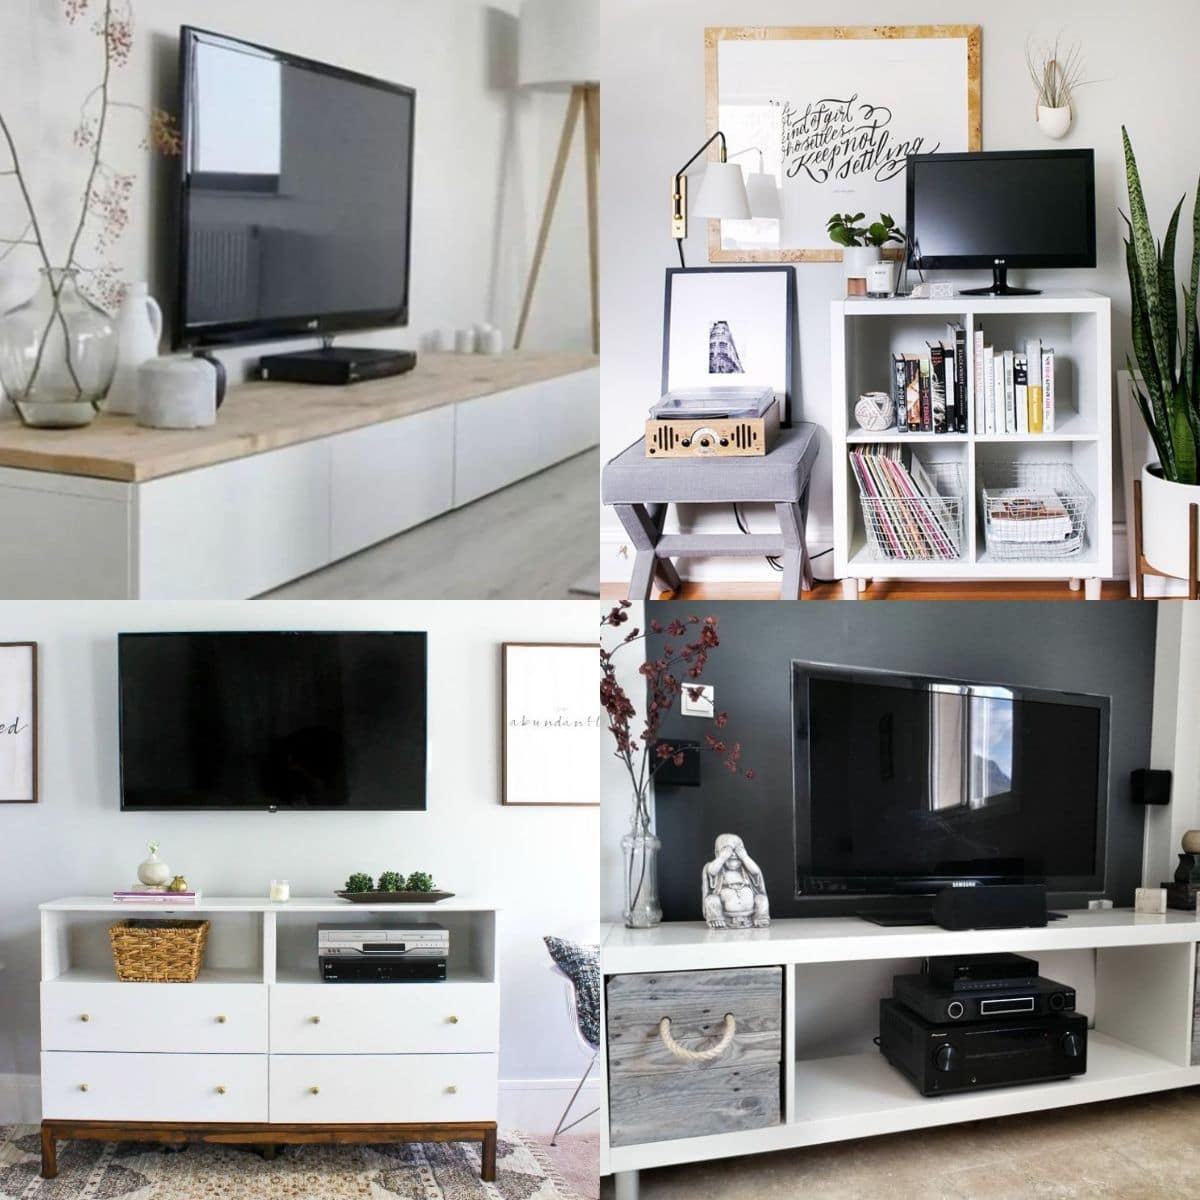 20 Stunning Ikea Tv Stand Hacks Craftsy Hacks #1 give your kallax tv stand new skins. 20 stunning ikea tv stand hacks